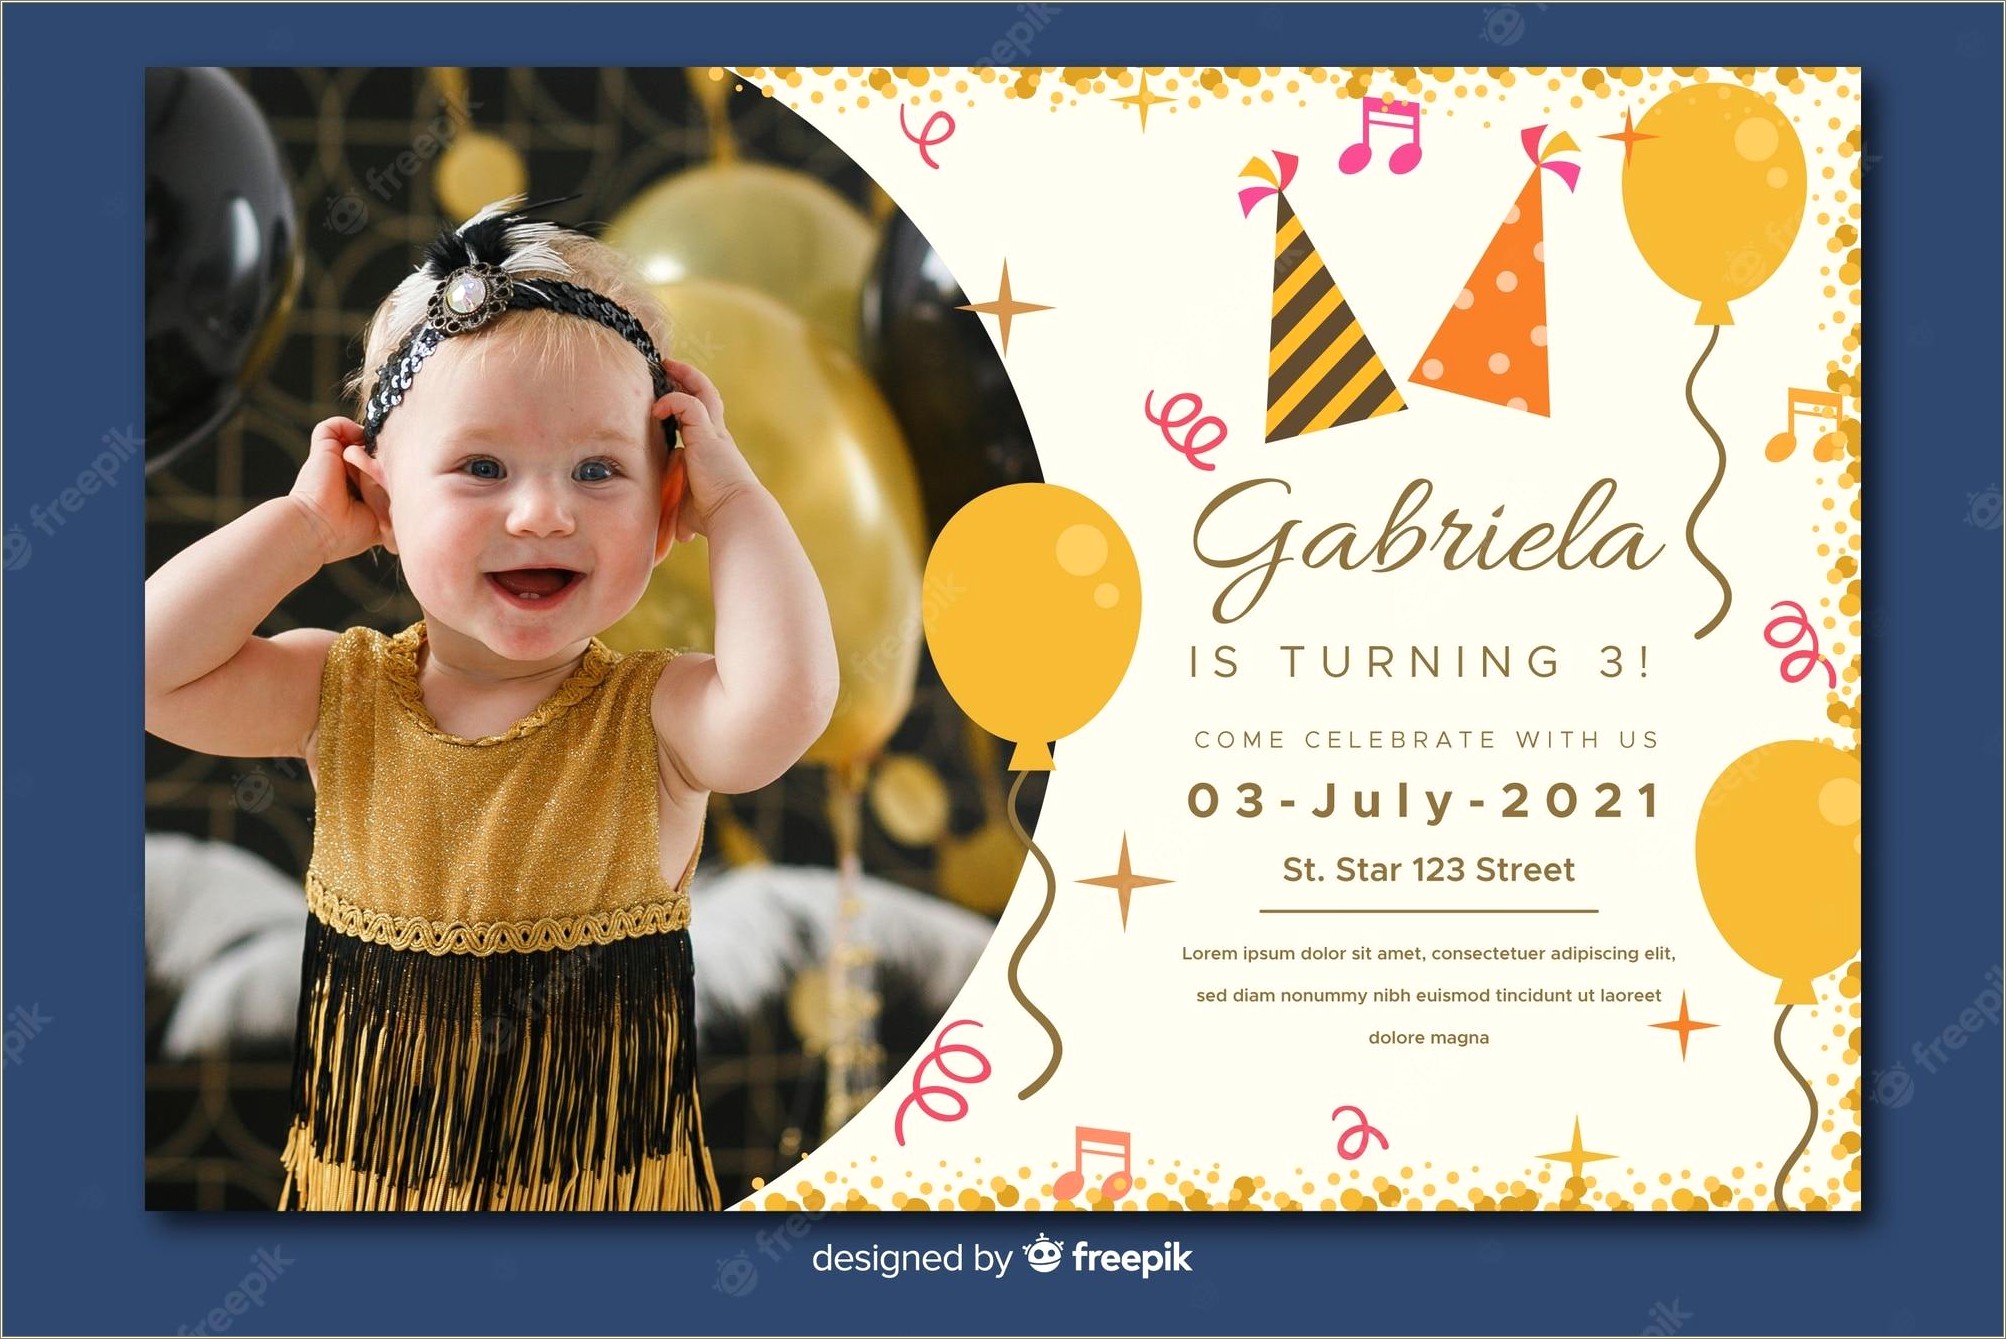 free-photoshop-birthday-invitation-card-template-resume-example-gallery